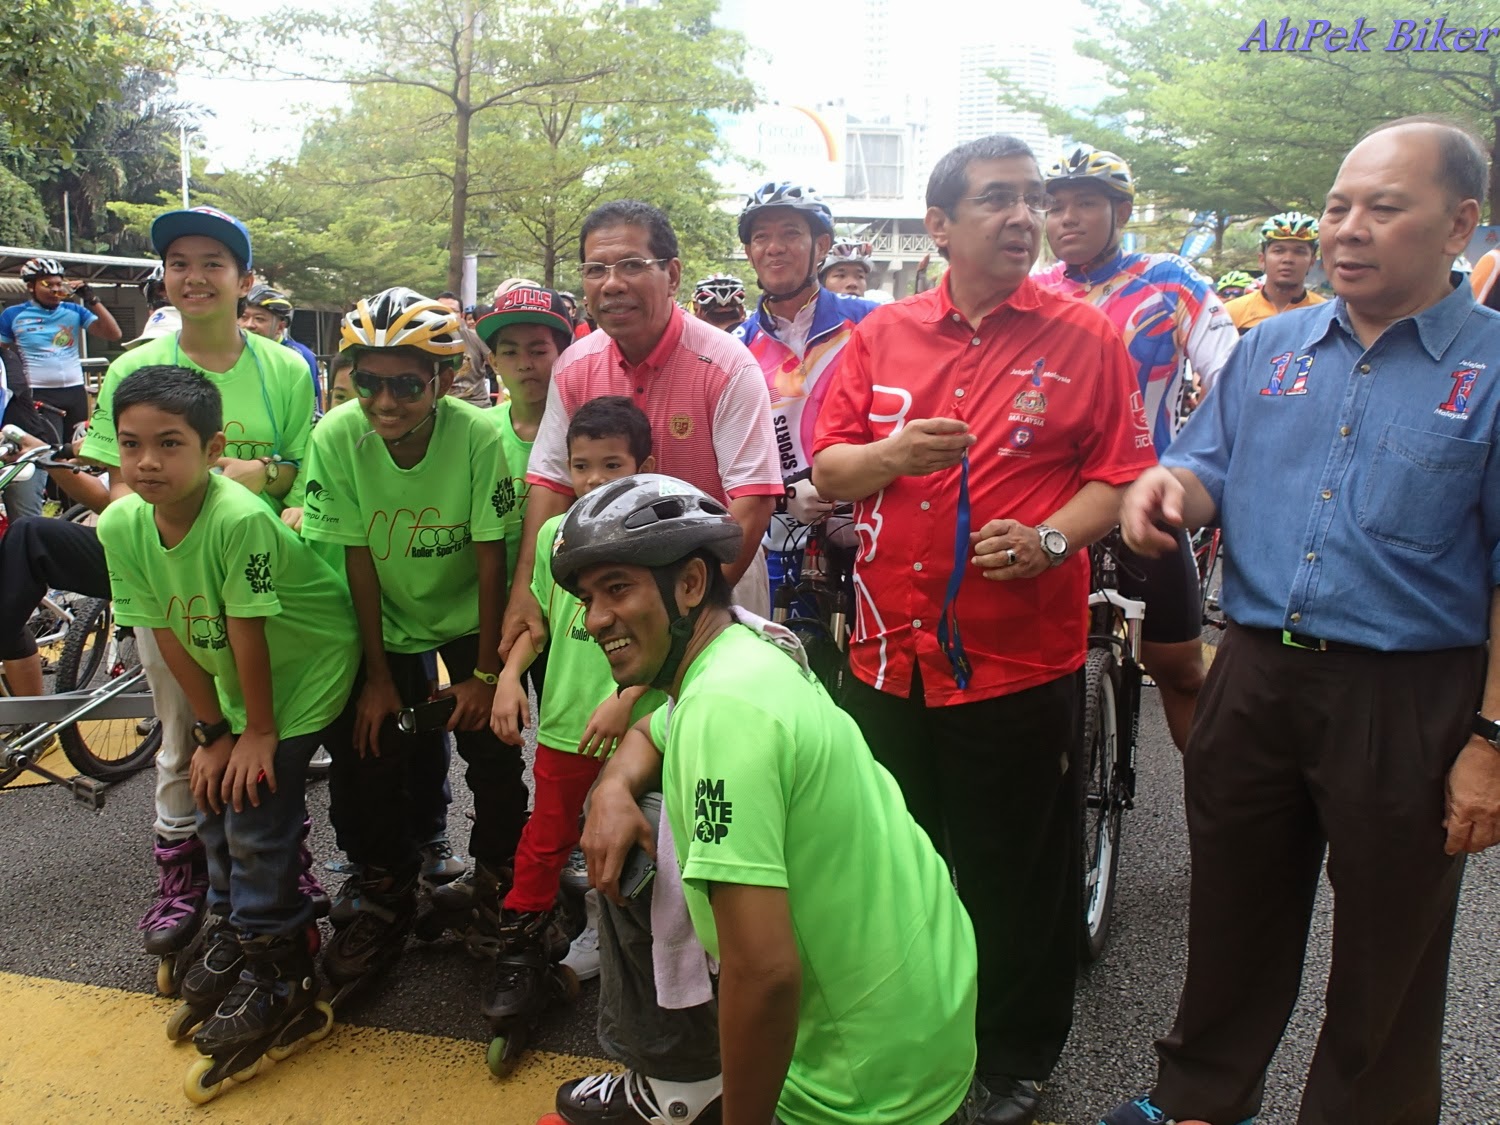 AhPek Biker - Old Dog Rides Again: Kuala Lumpur : World ...